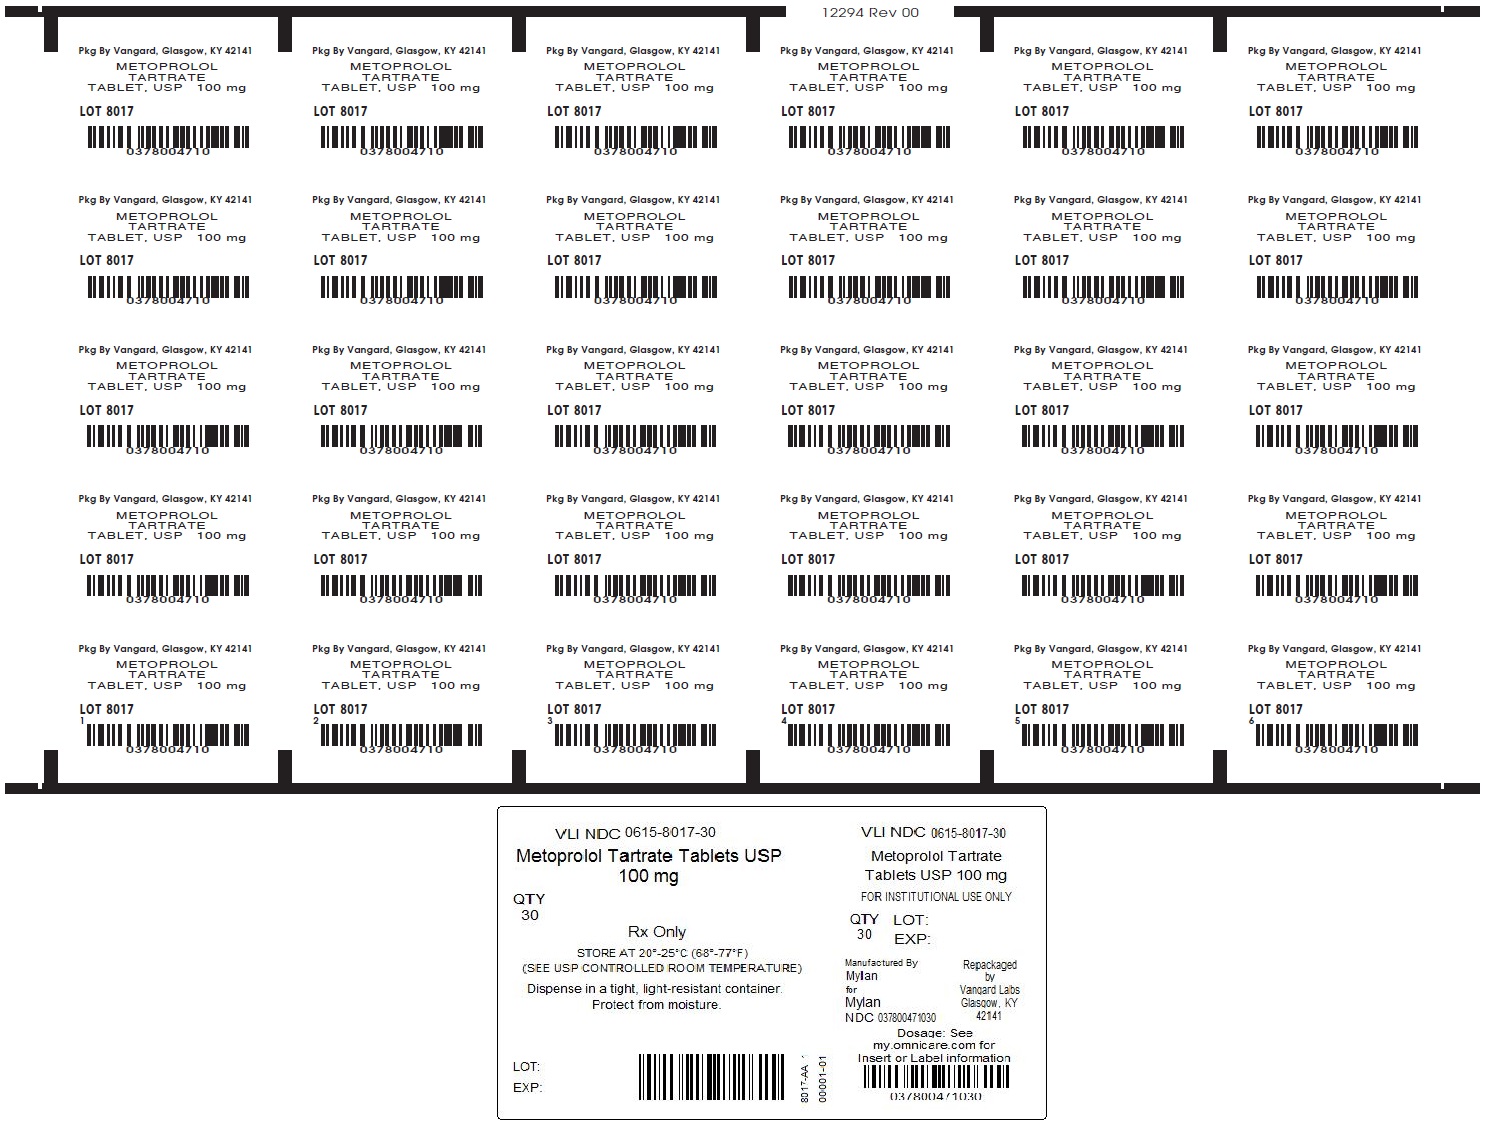 Metoprolol Tartrate 50mg unit-dose label